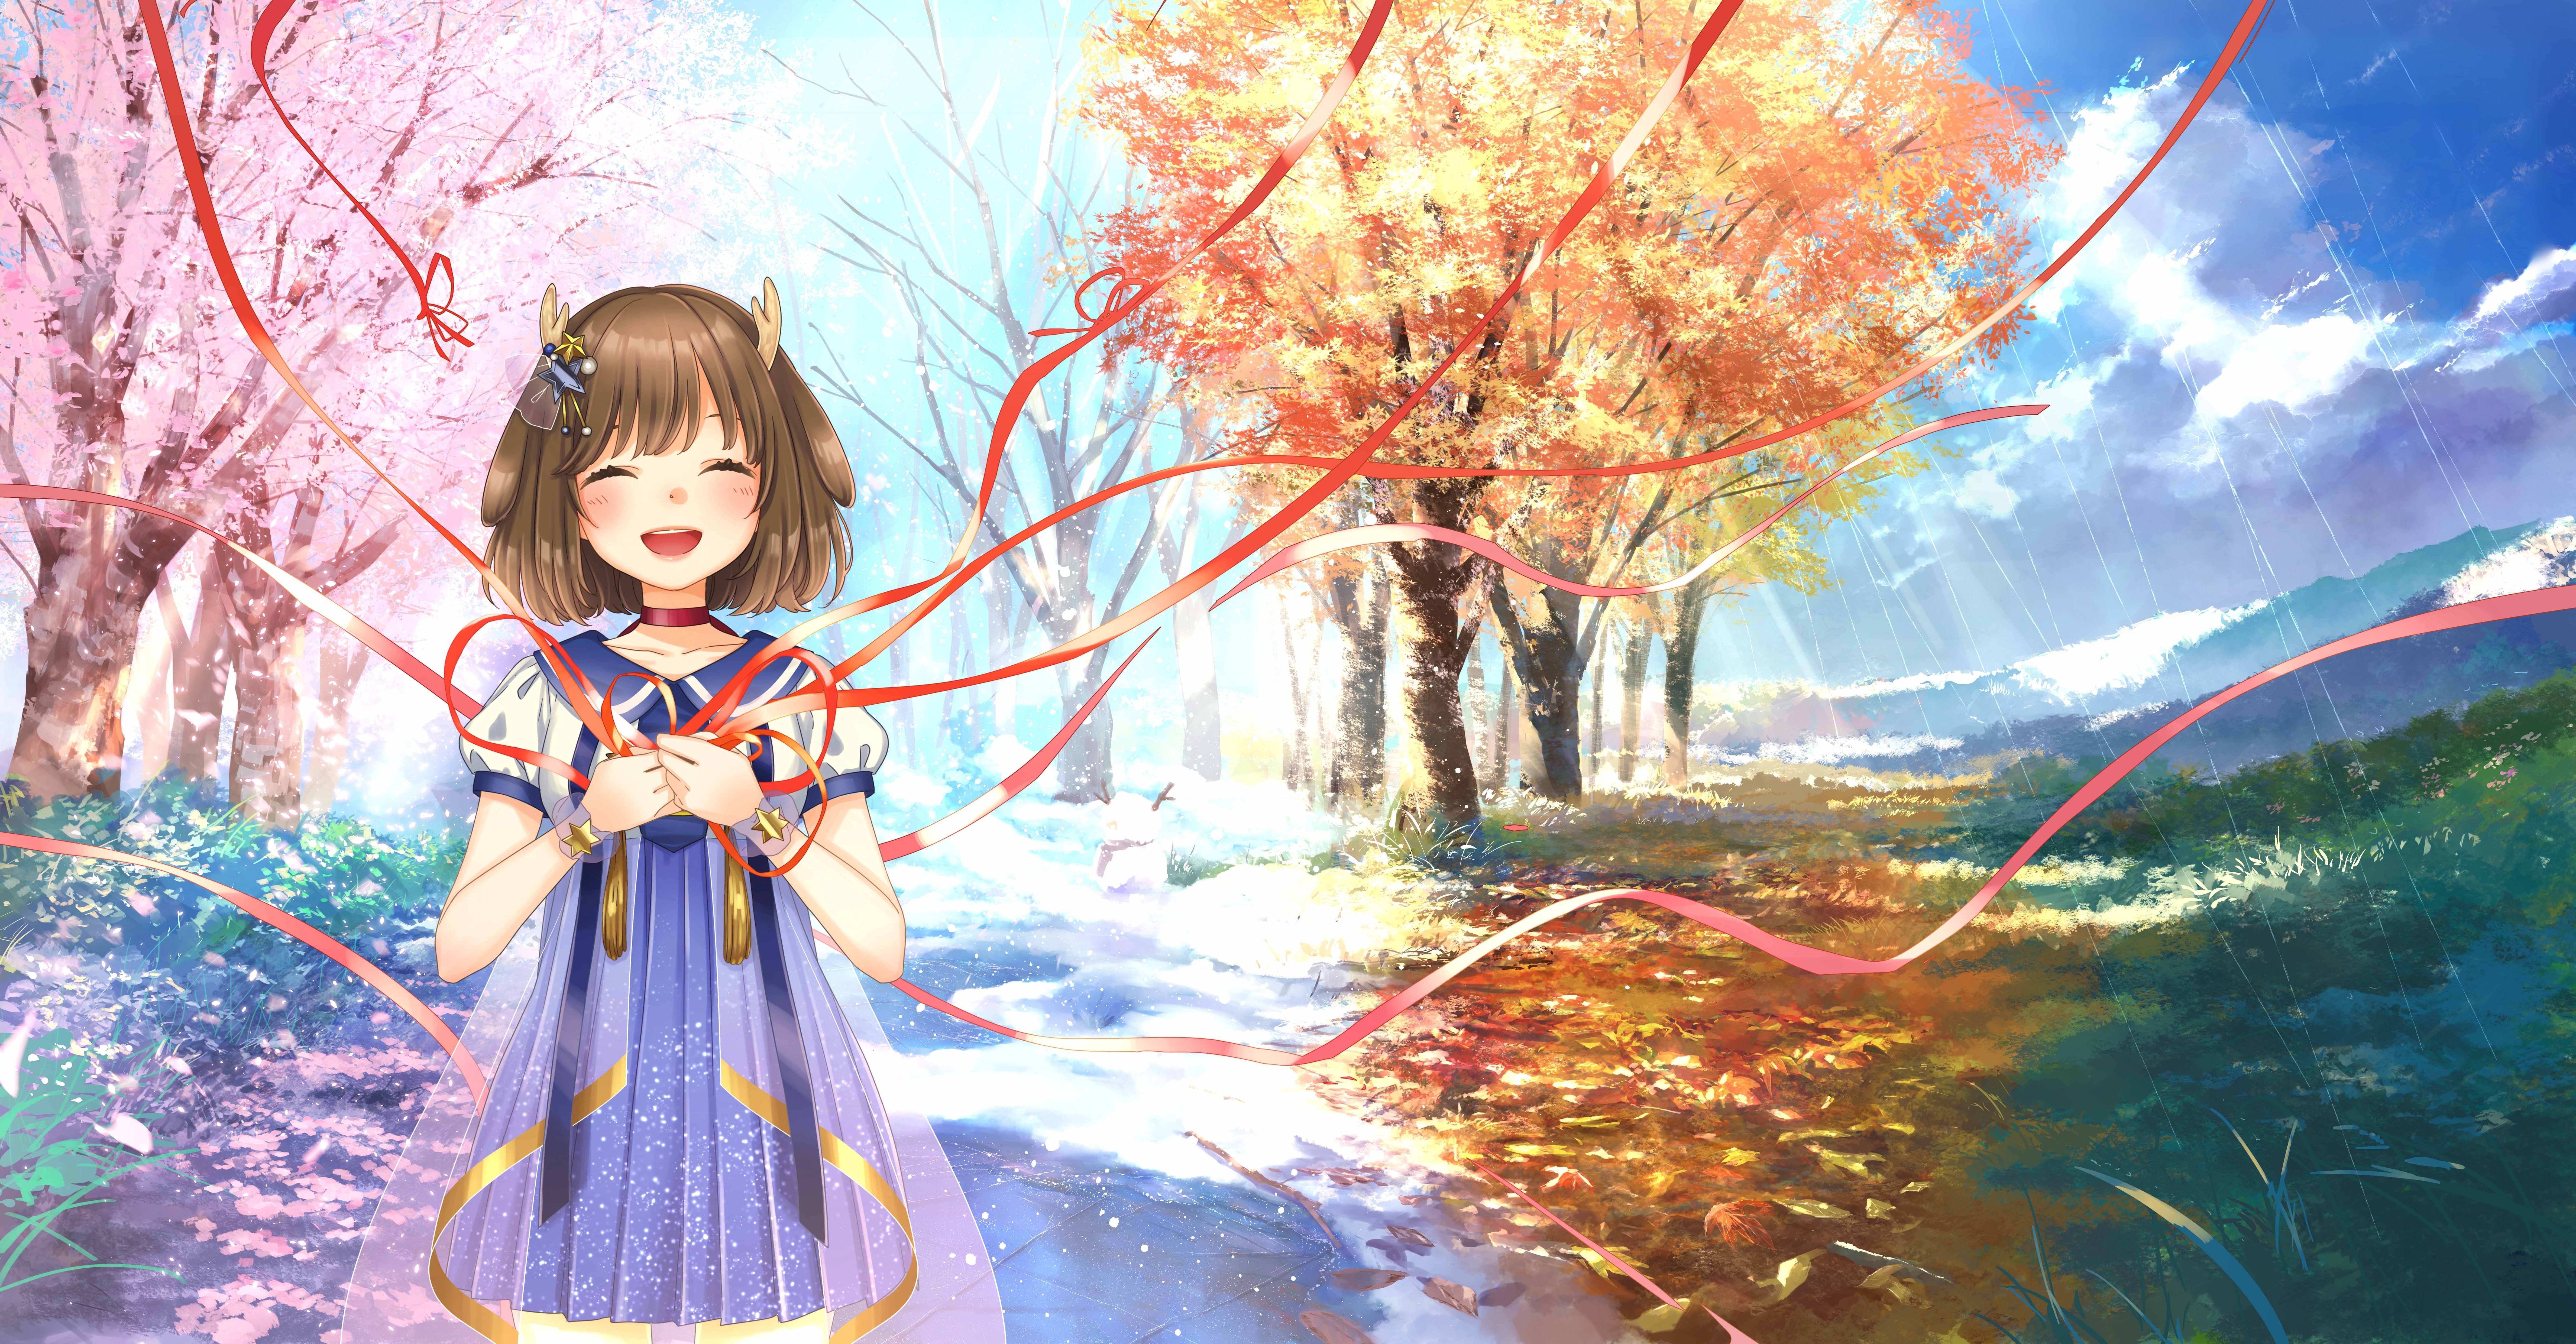 Wallpaper Summer, Winter, Spring, Four Seasons, Cute Anime Girl, Anime Landscape, Autumn:9508x4961